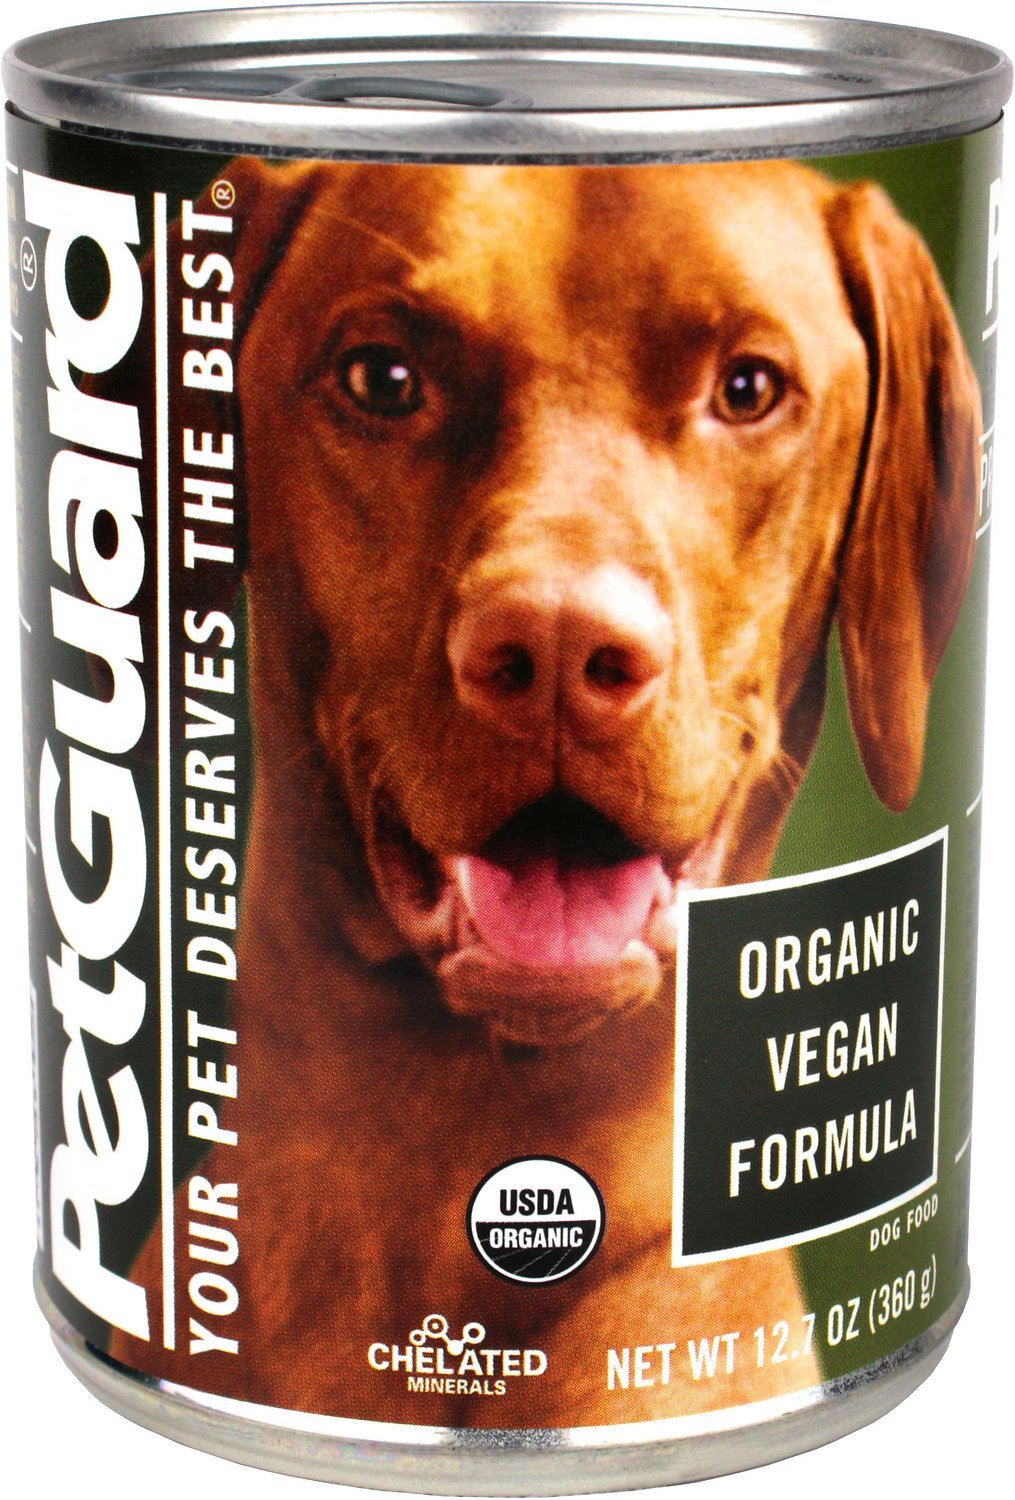 PetGuard Organic Vegan Formula Canned Dog Food, 12.7